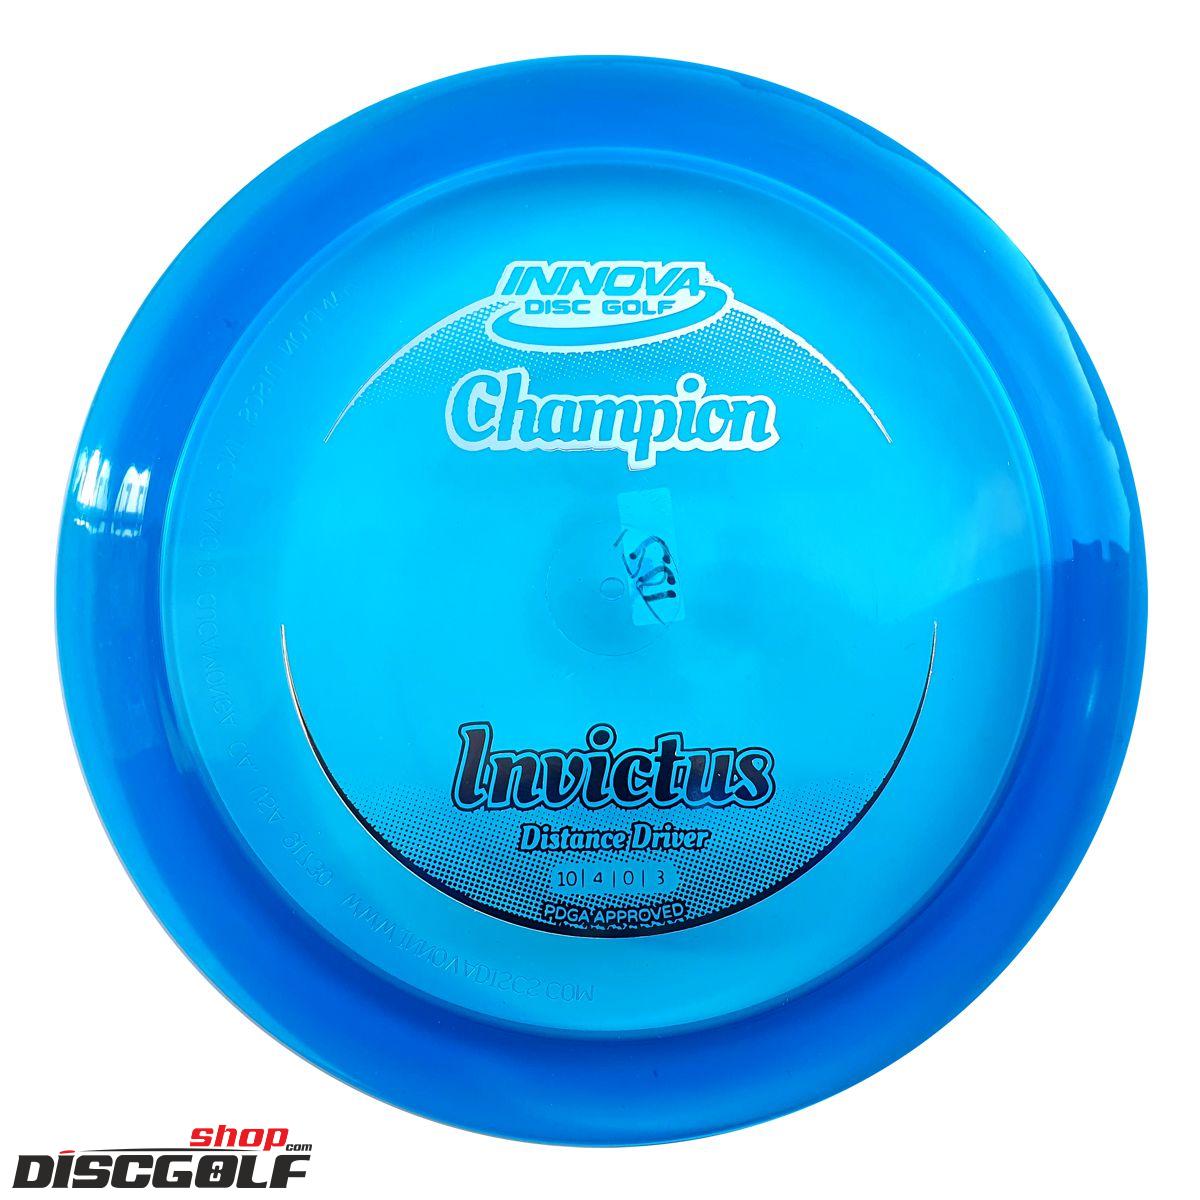 Innova Invictus Champion